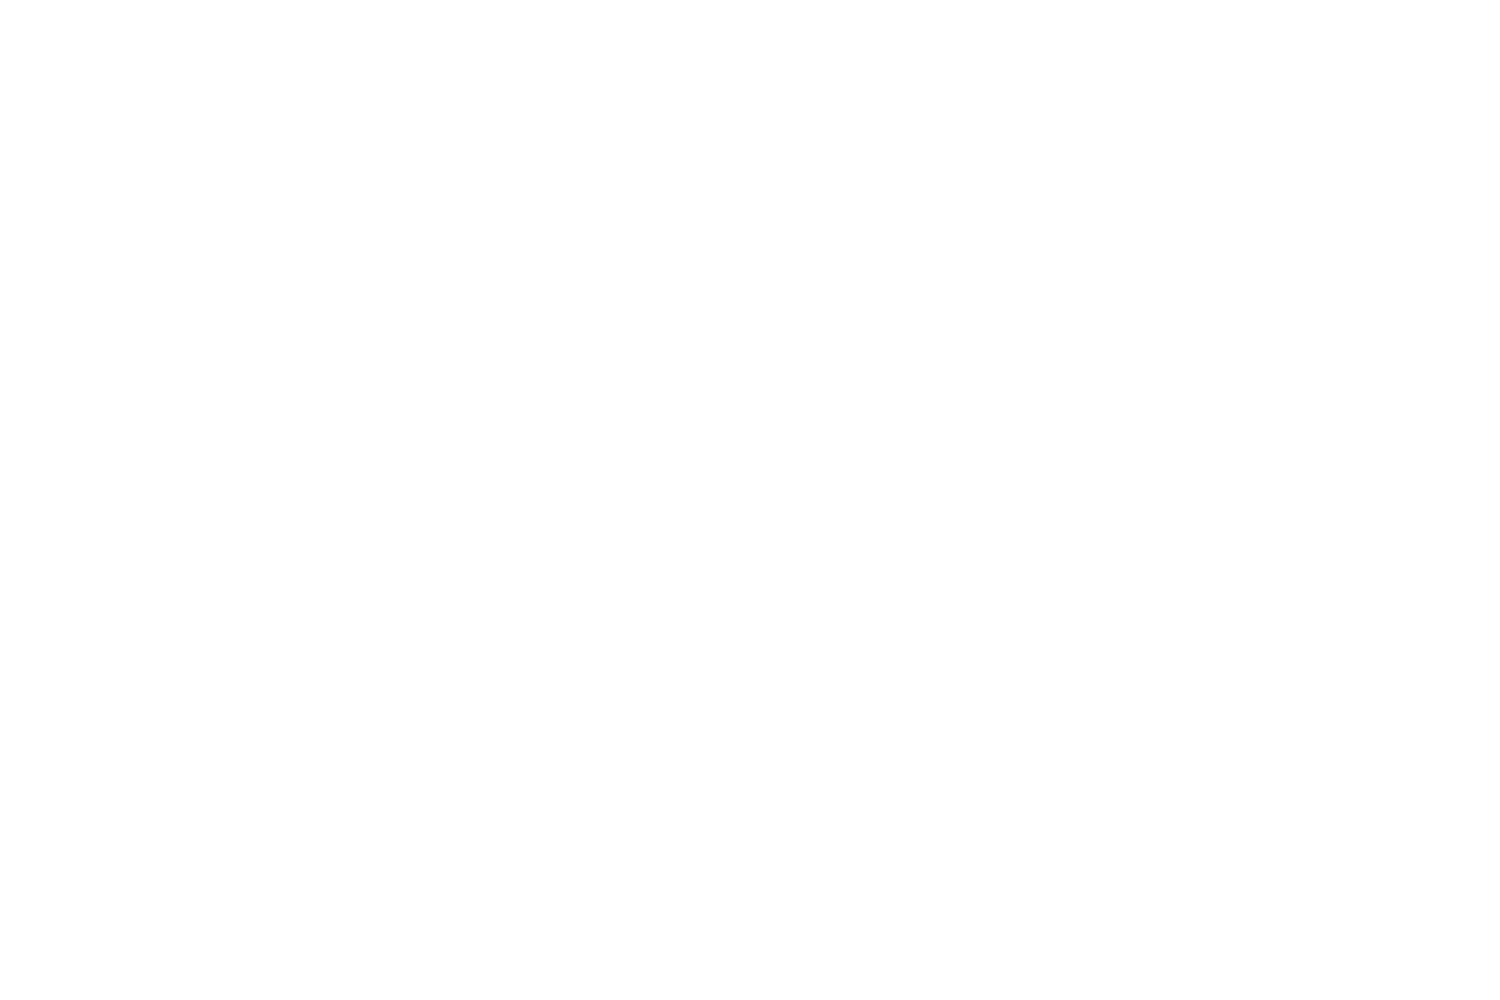 lara vukson logo transparent background for McL.png